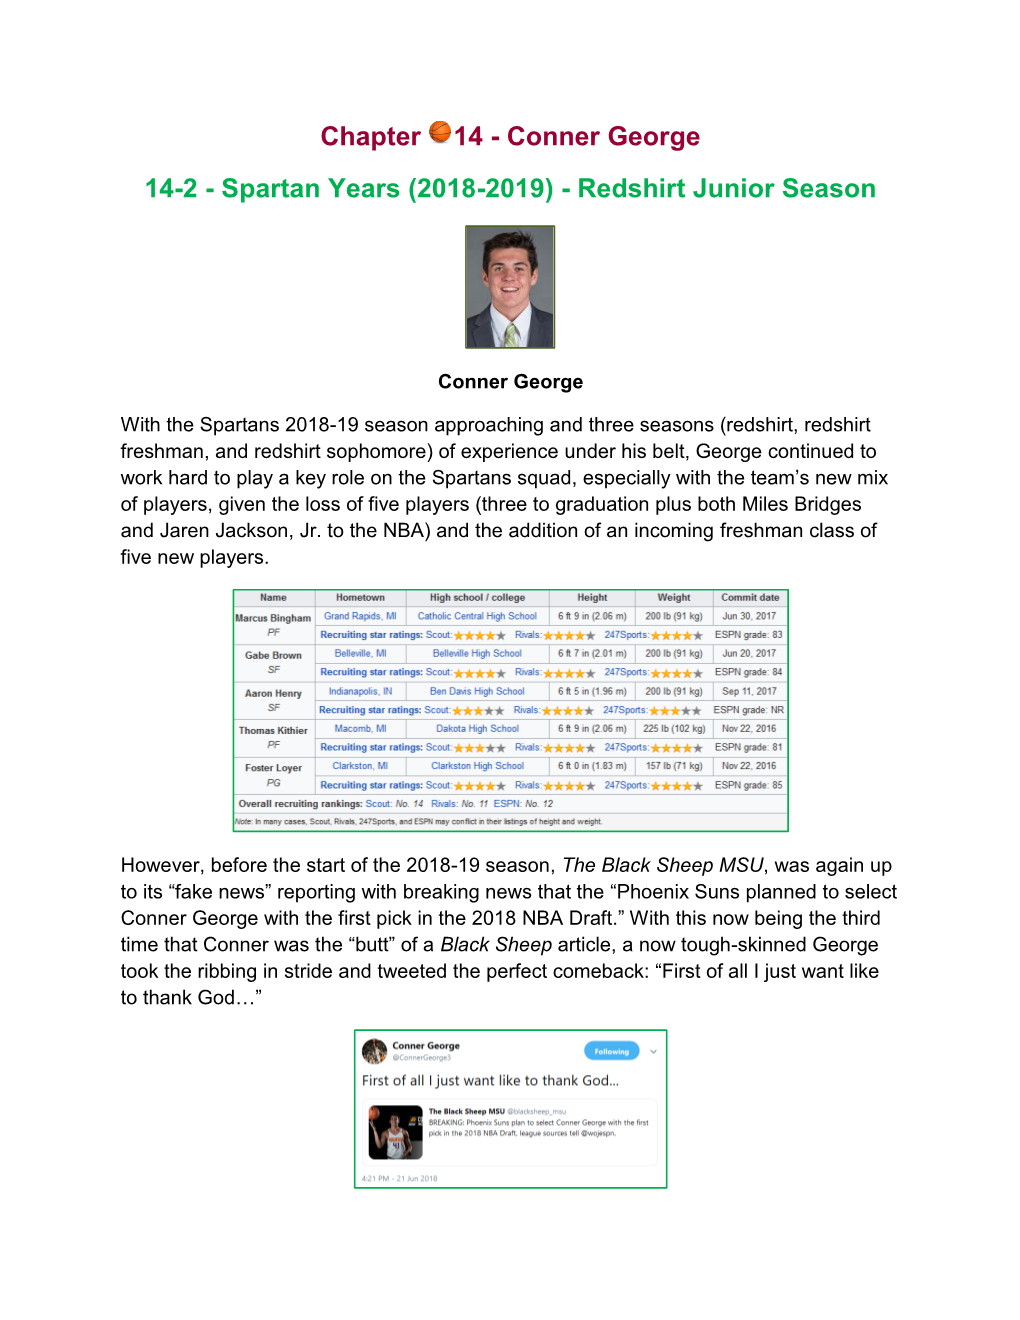 Conner George 14-2 - Spartan Years (2018-2019) - Redshirt Junior Season